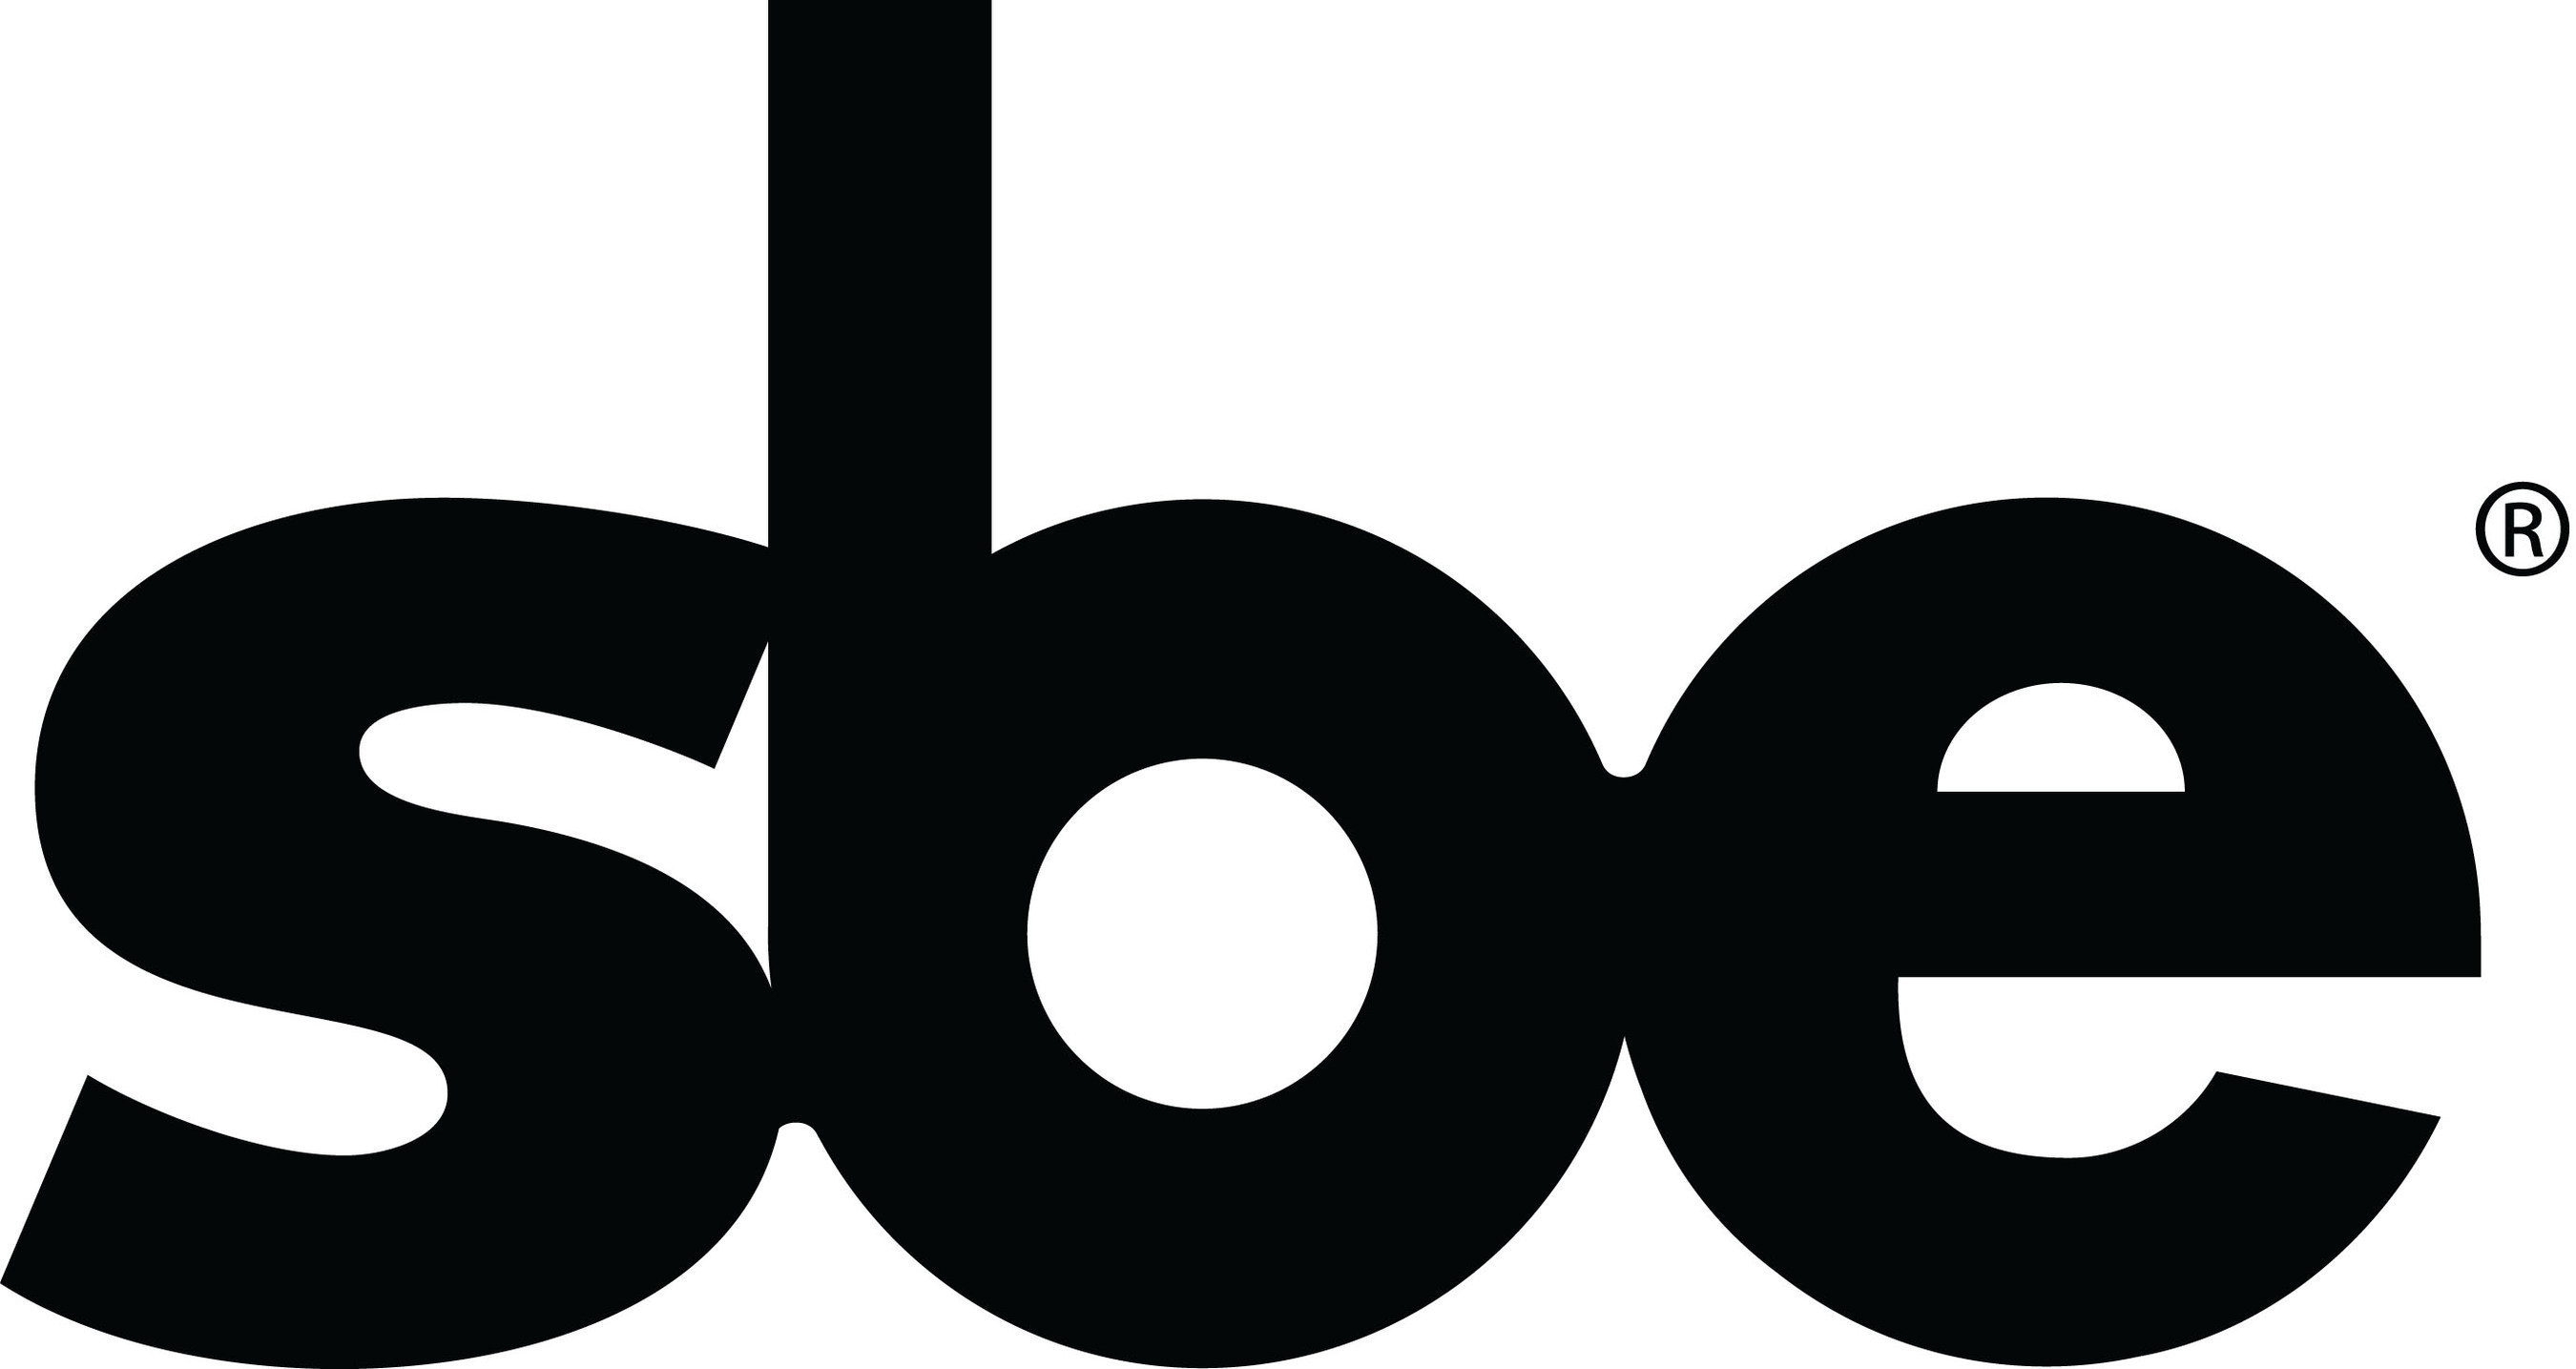 sbe Logo